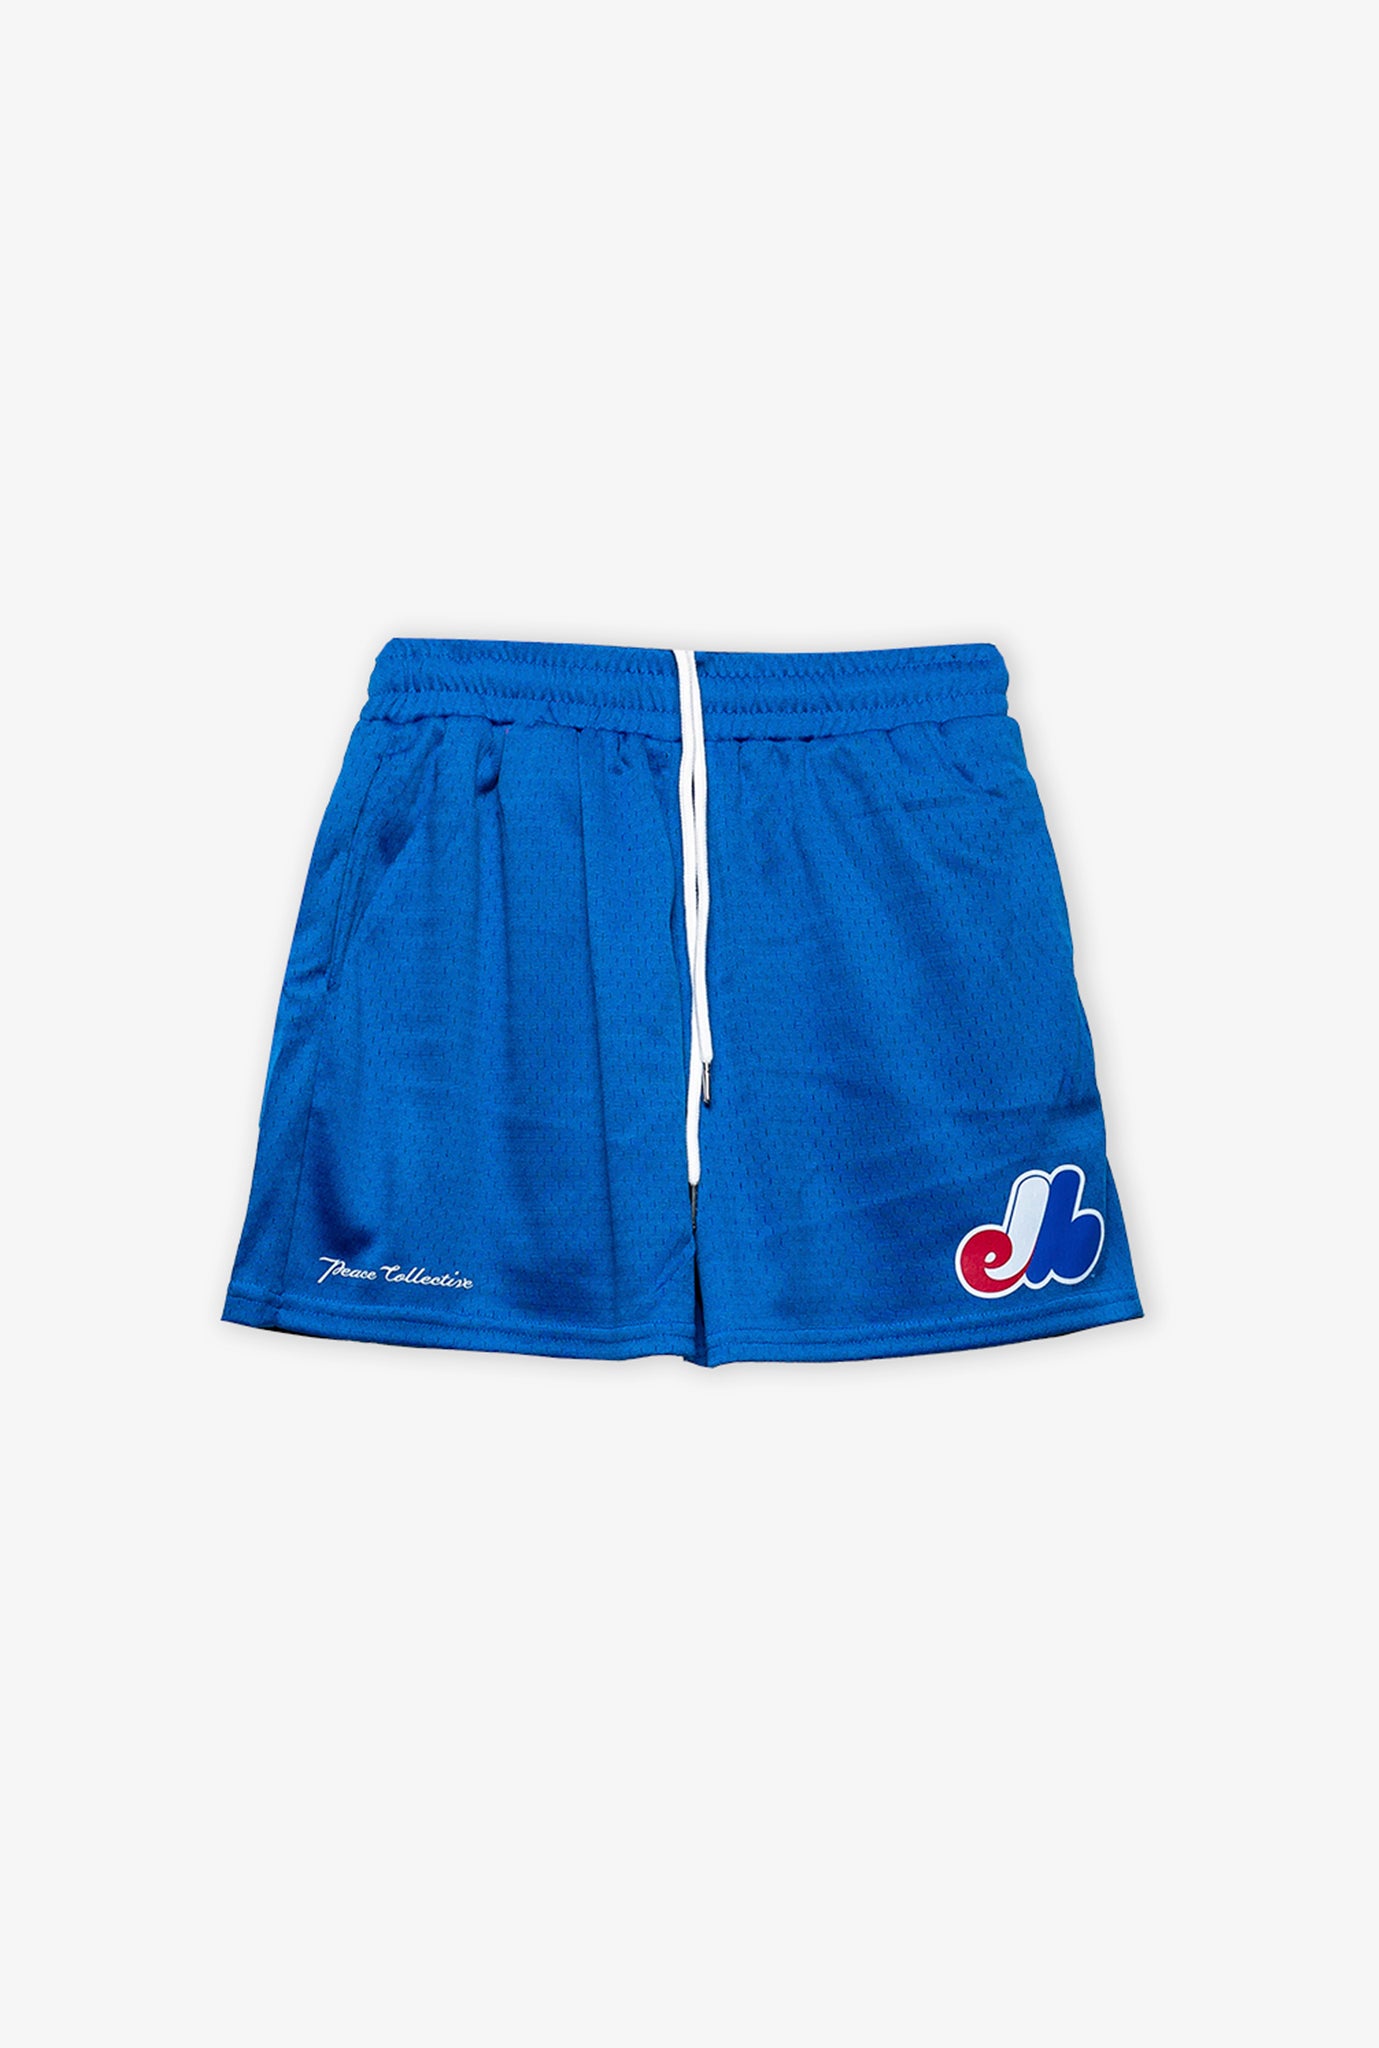 Montreal Expos Mesh Shorts - Blue